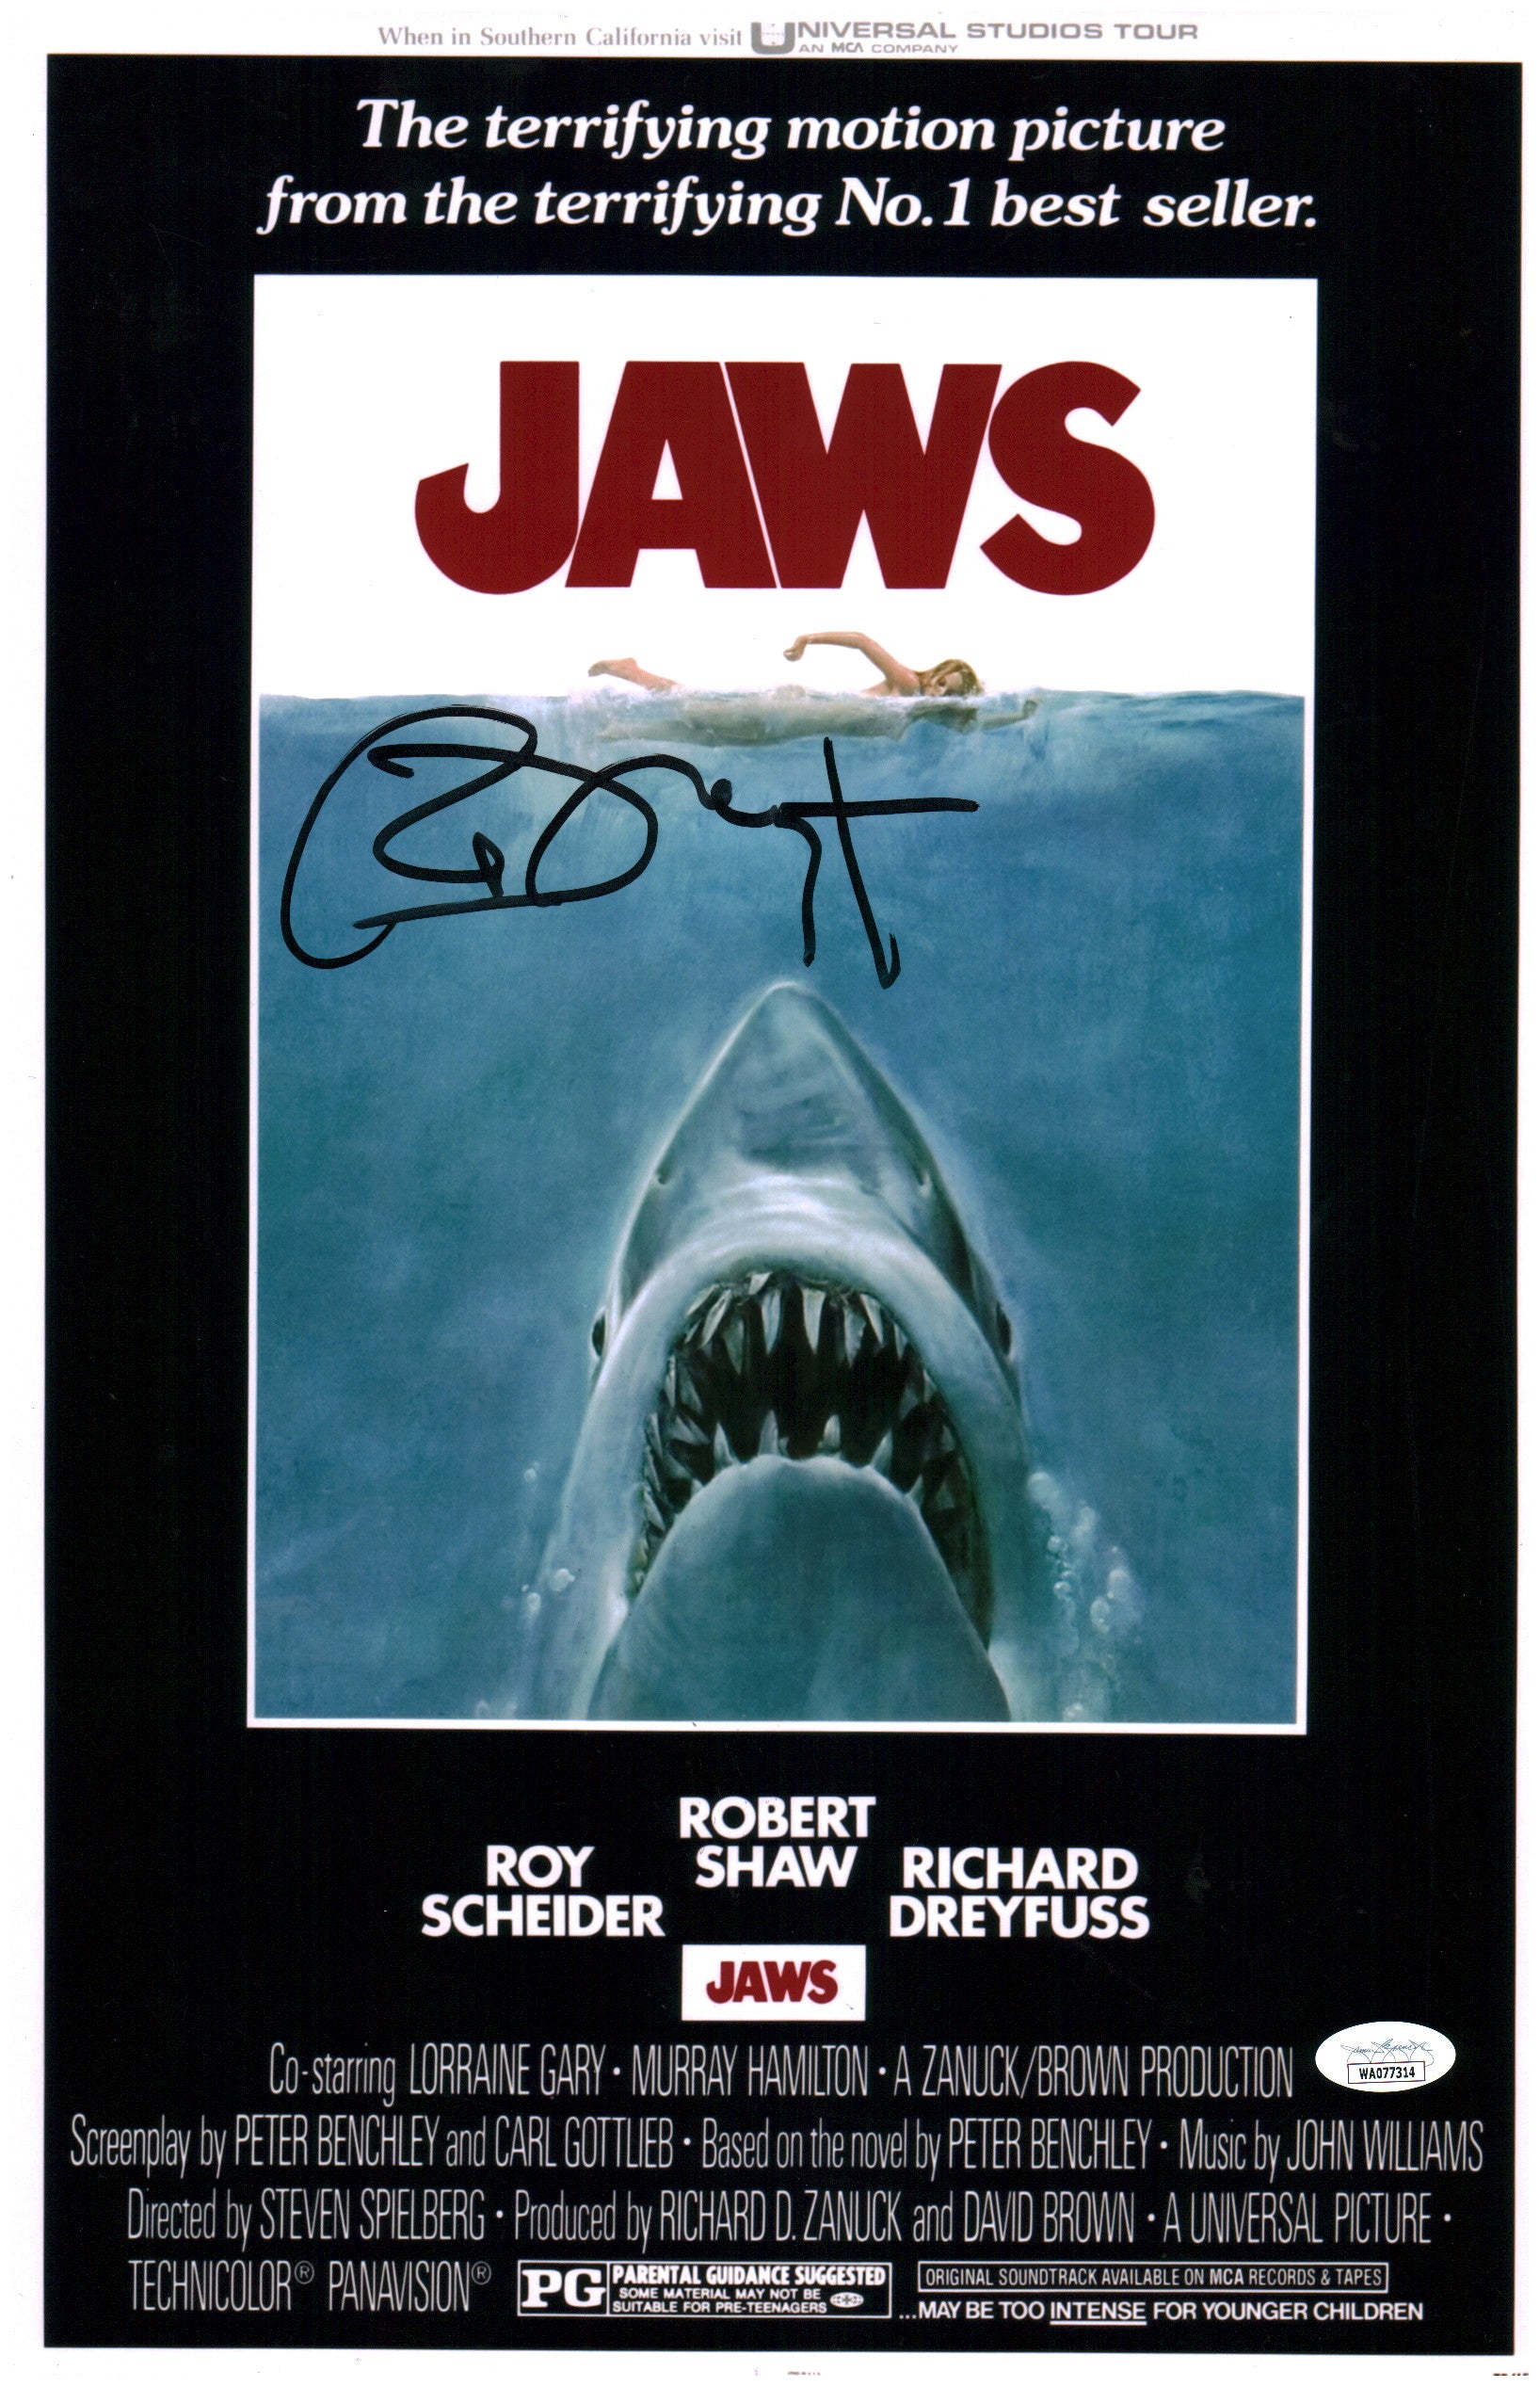 Richard Dreyfuss Jaws 11x17 Signed Photo Poster JSA Certified Autograph